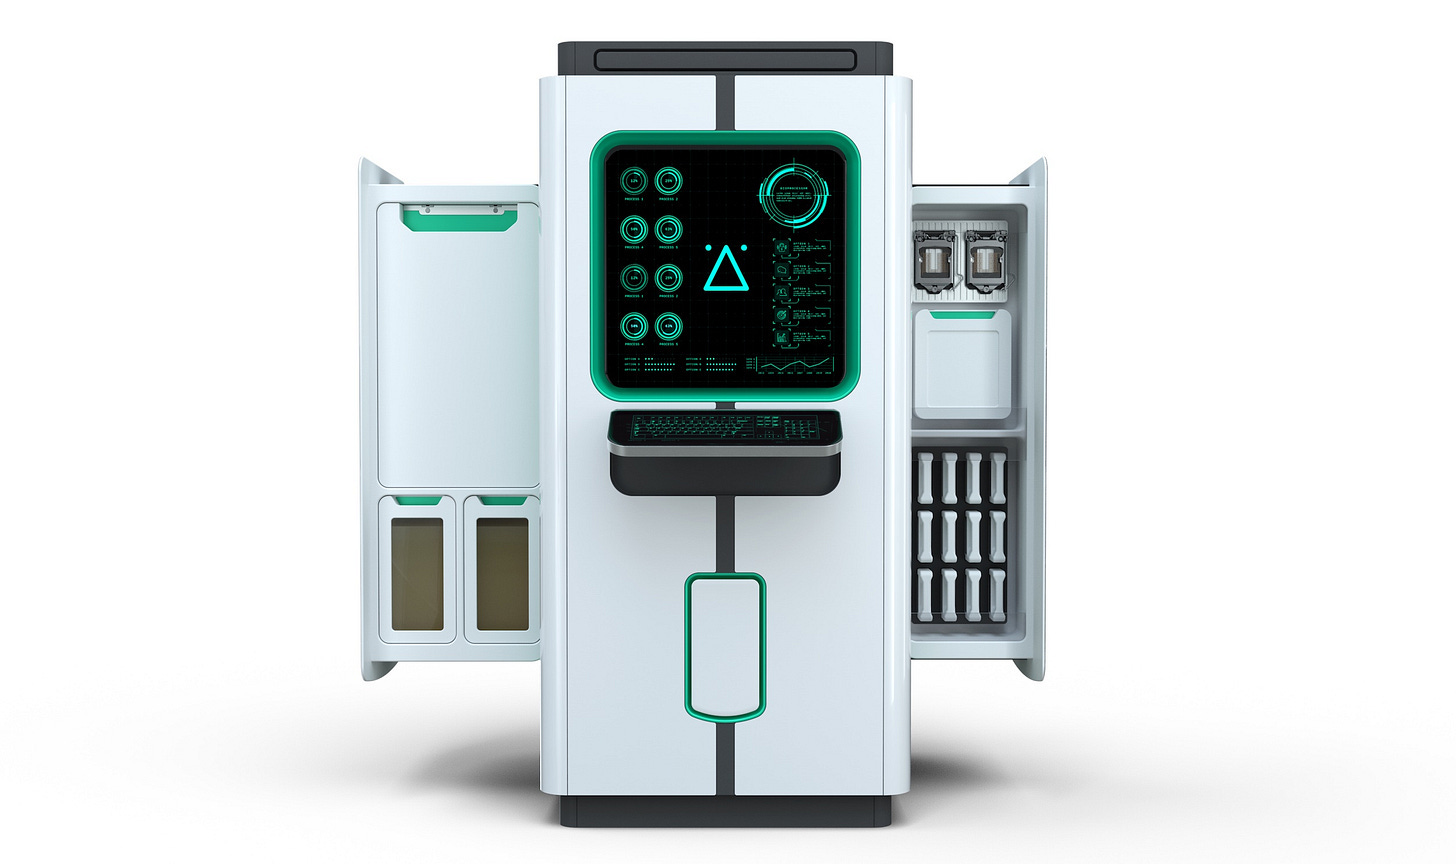 Stämm Biotech raises $17M for its next-generation, 3D printed bioreactor |  TechCrunch